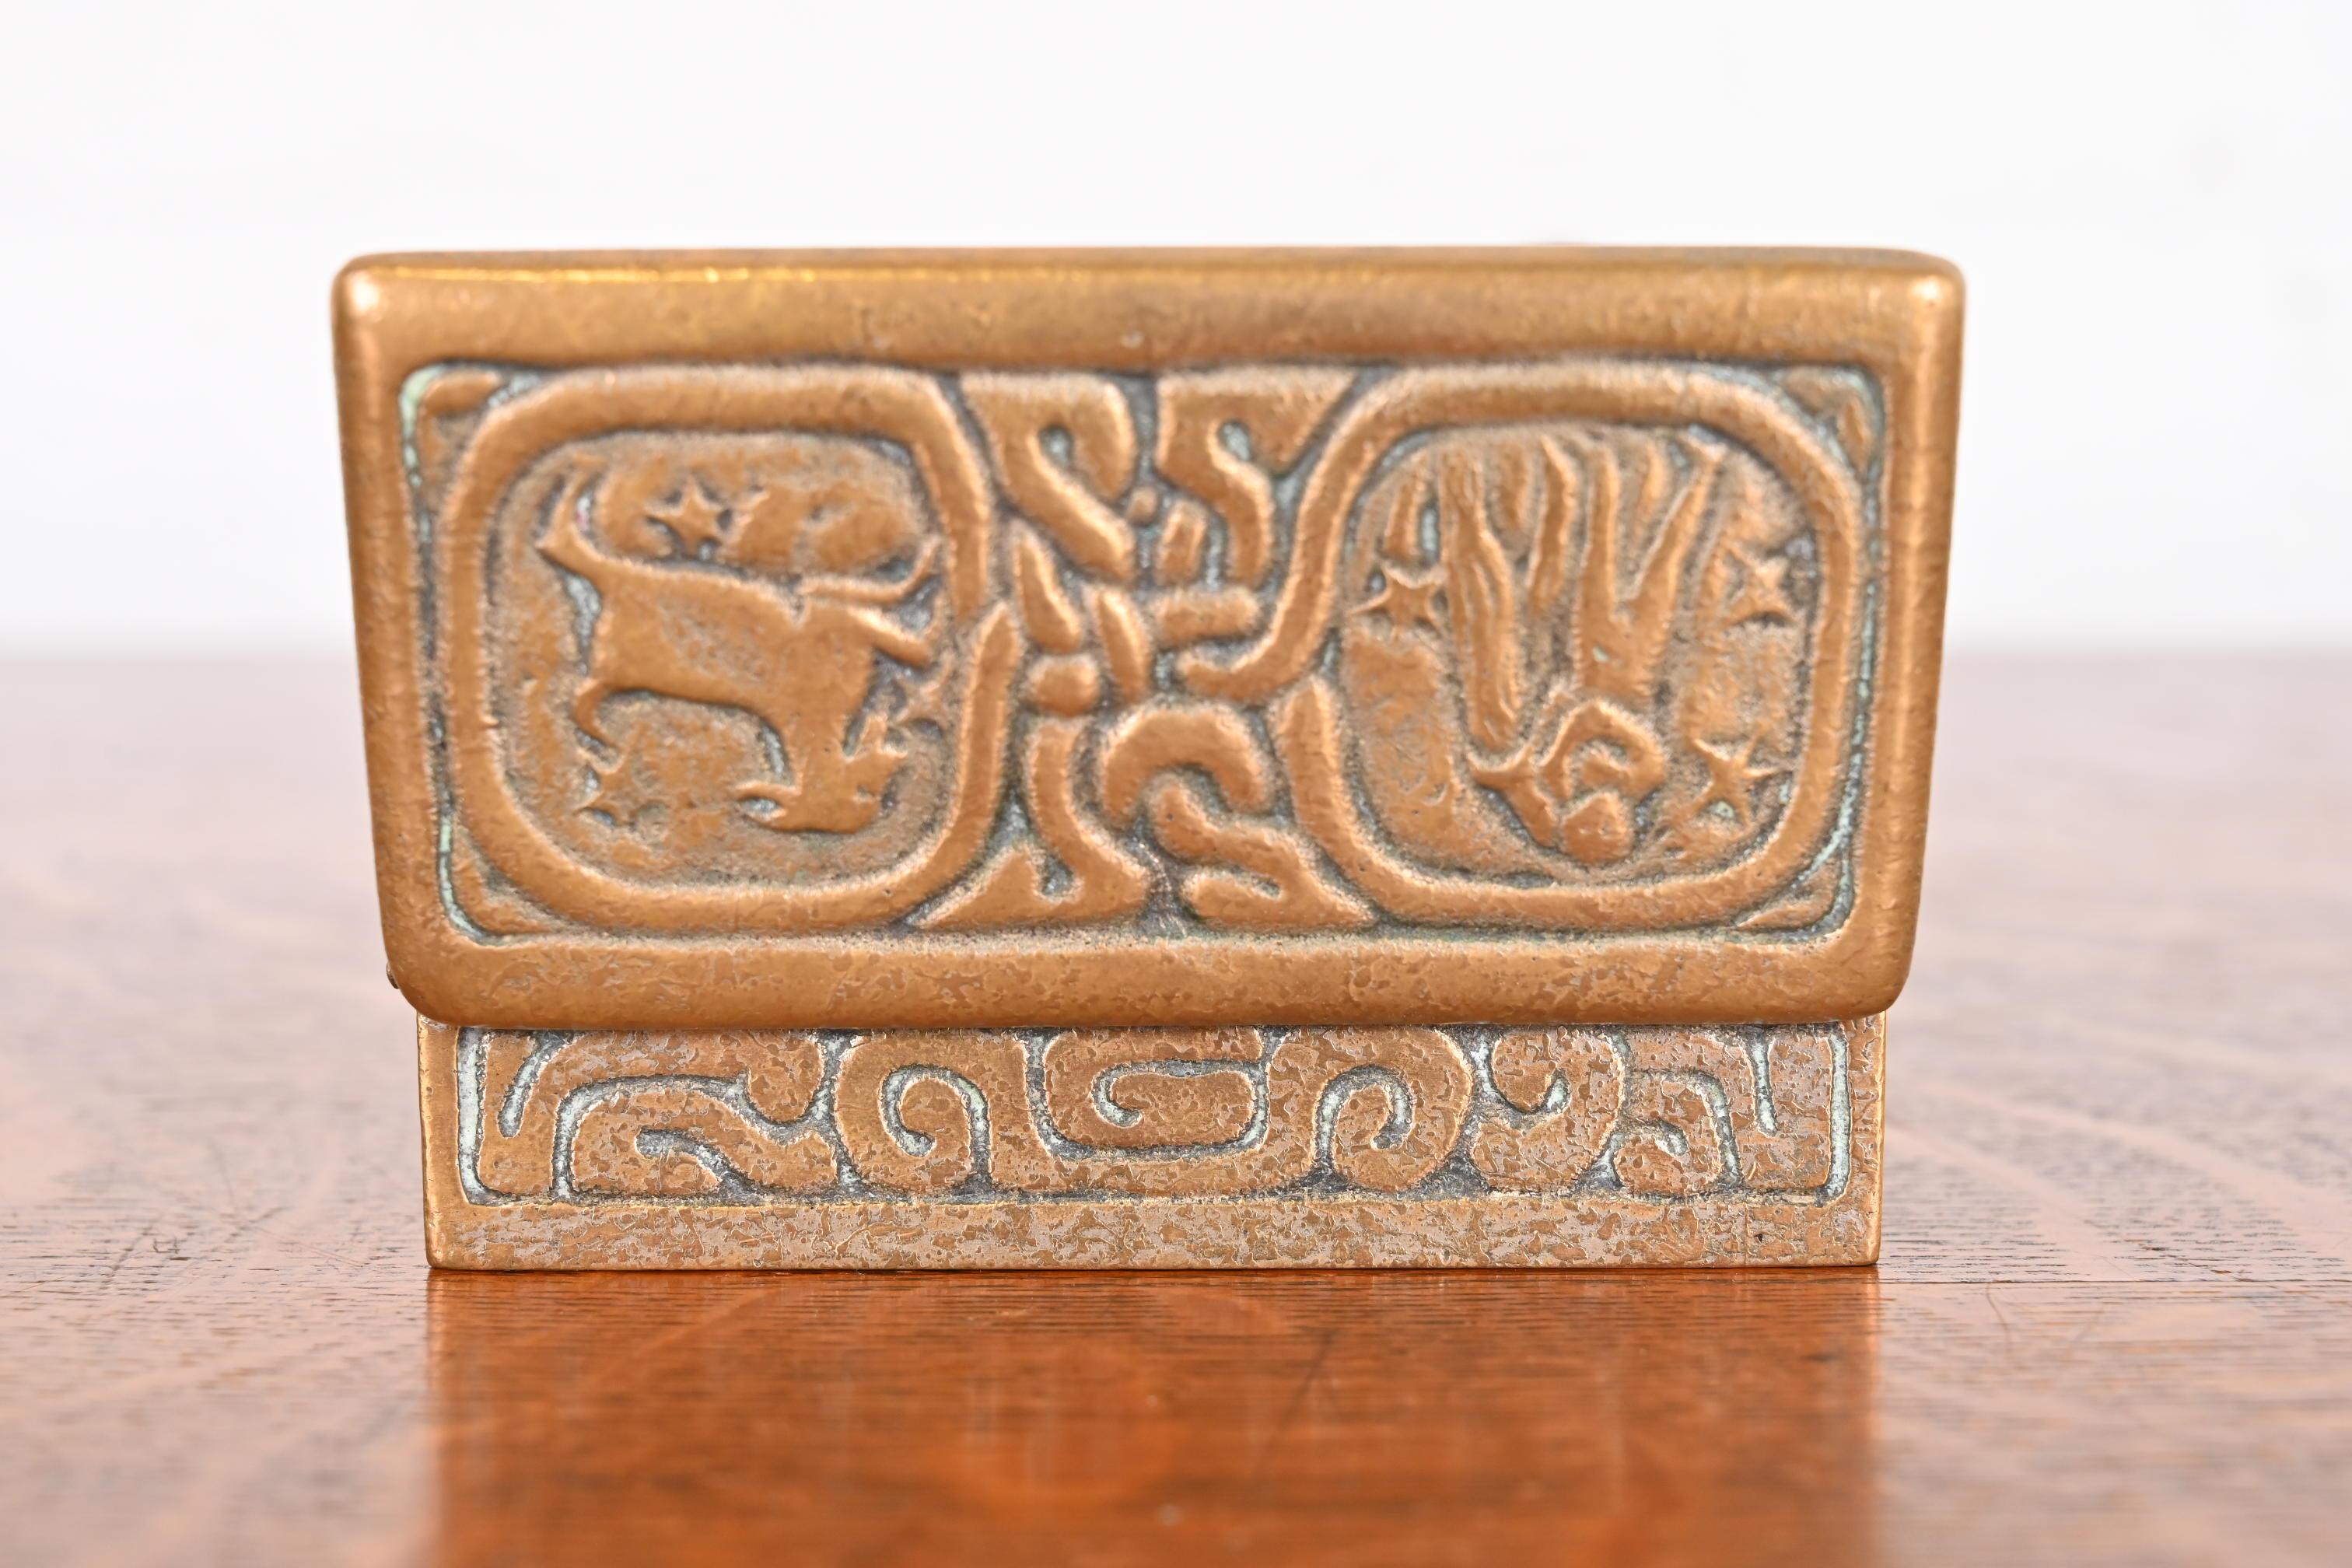 Tiffany Studios New York Zodiac Bronze Doré Stamp Box For Sale 6